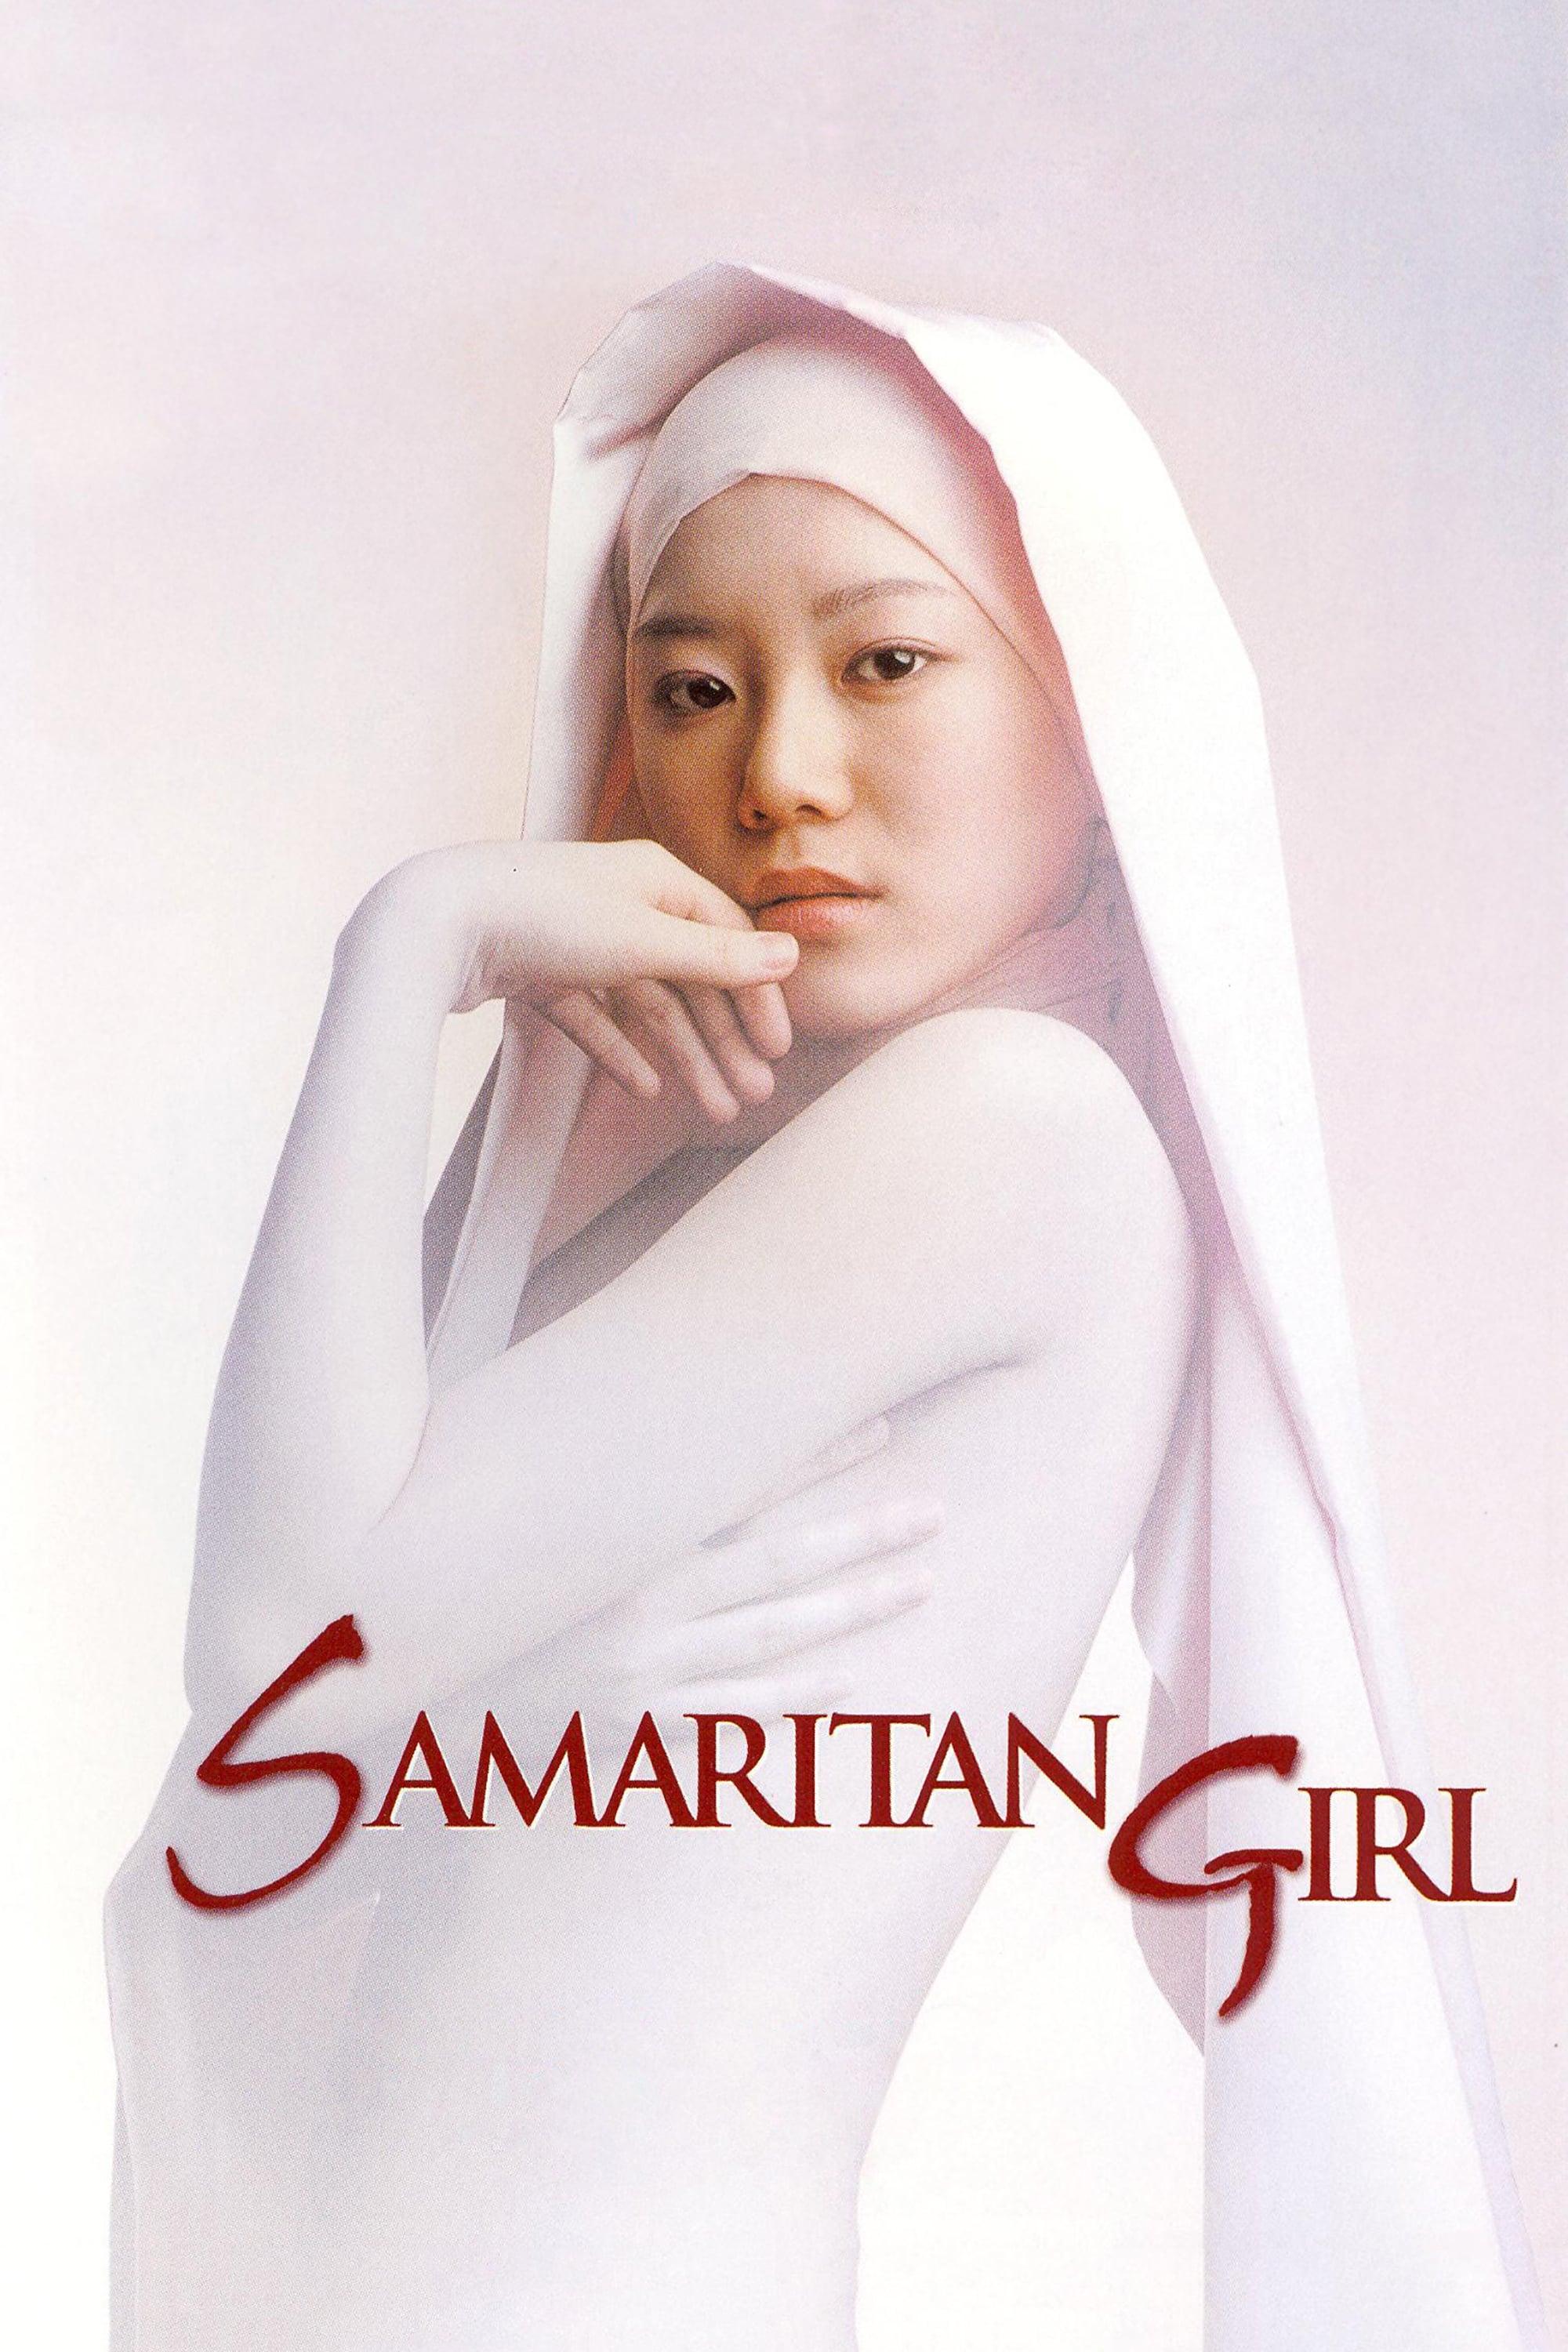 Samaritan Girl poster